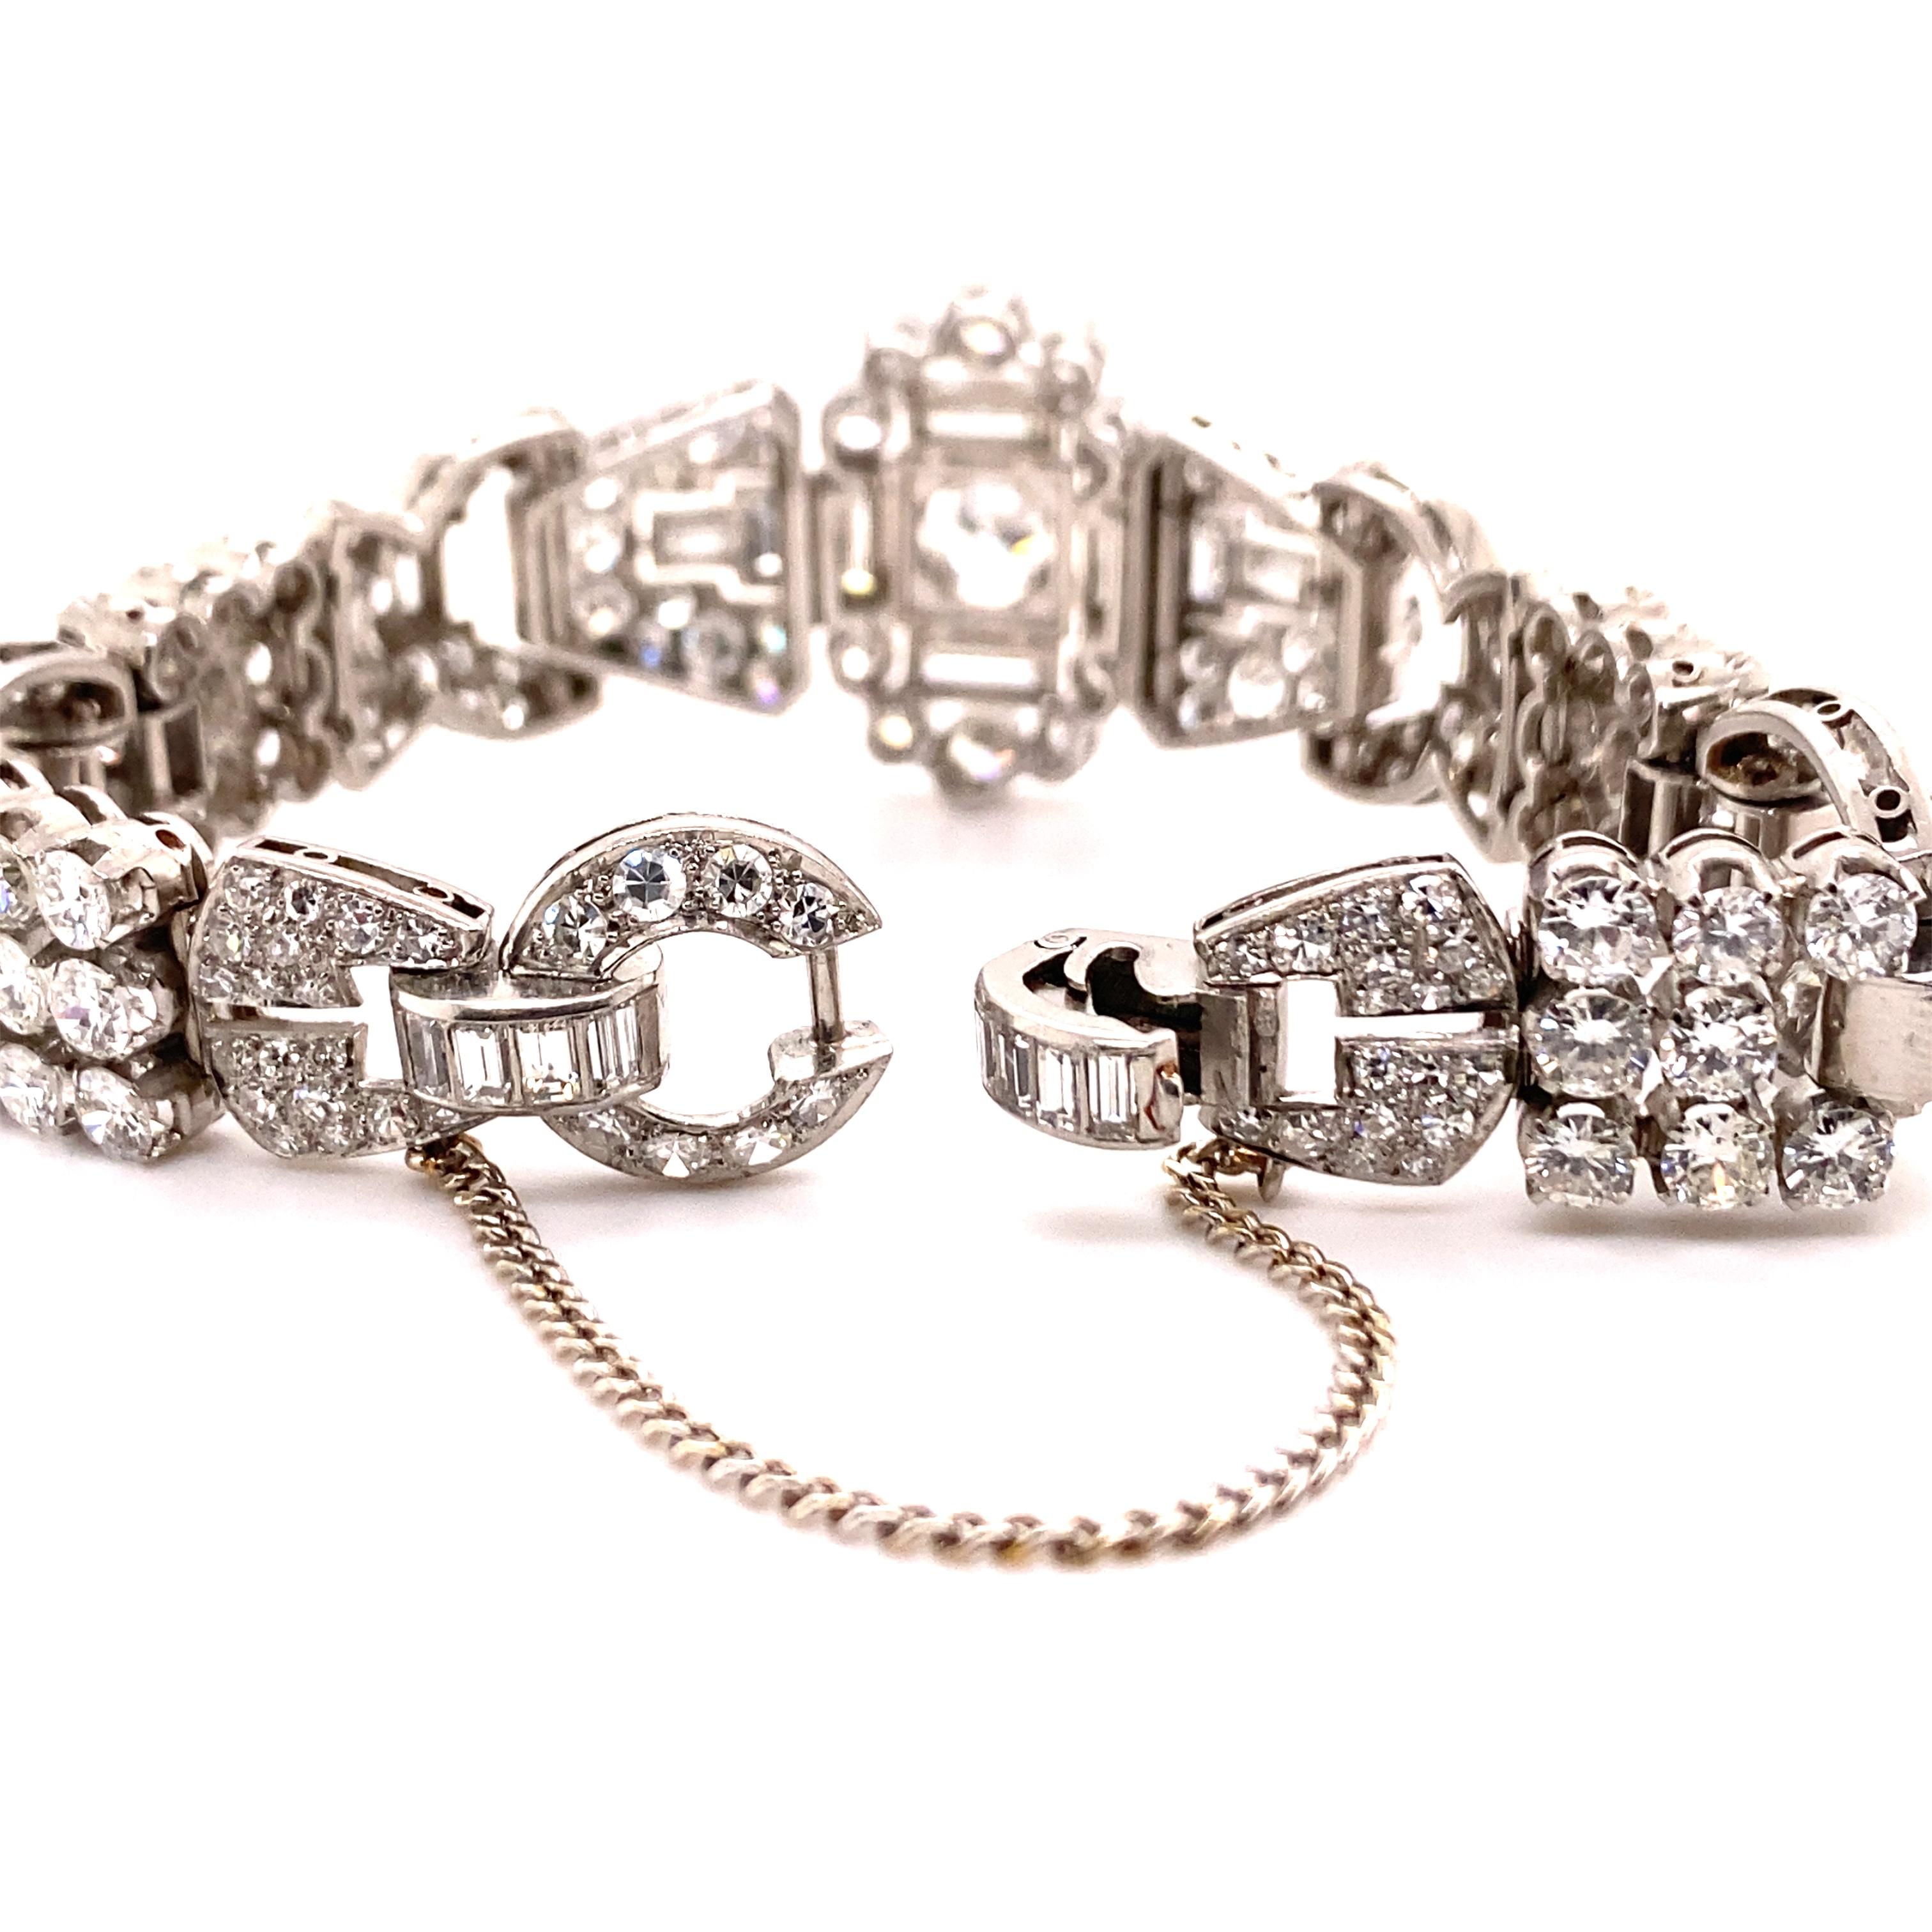 Brilliant Cut Art Deco Style Diamond Bracelet in Platinum 950